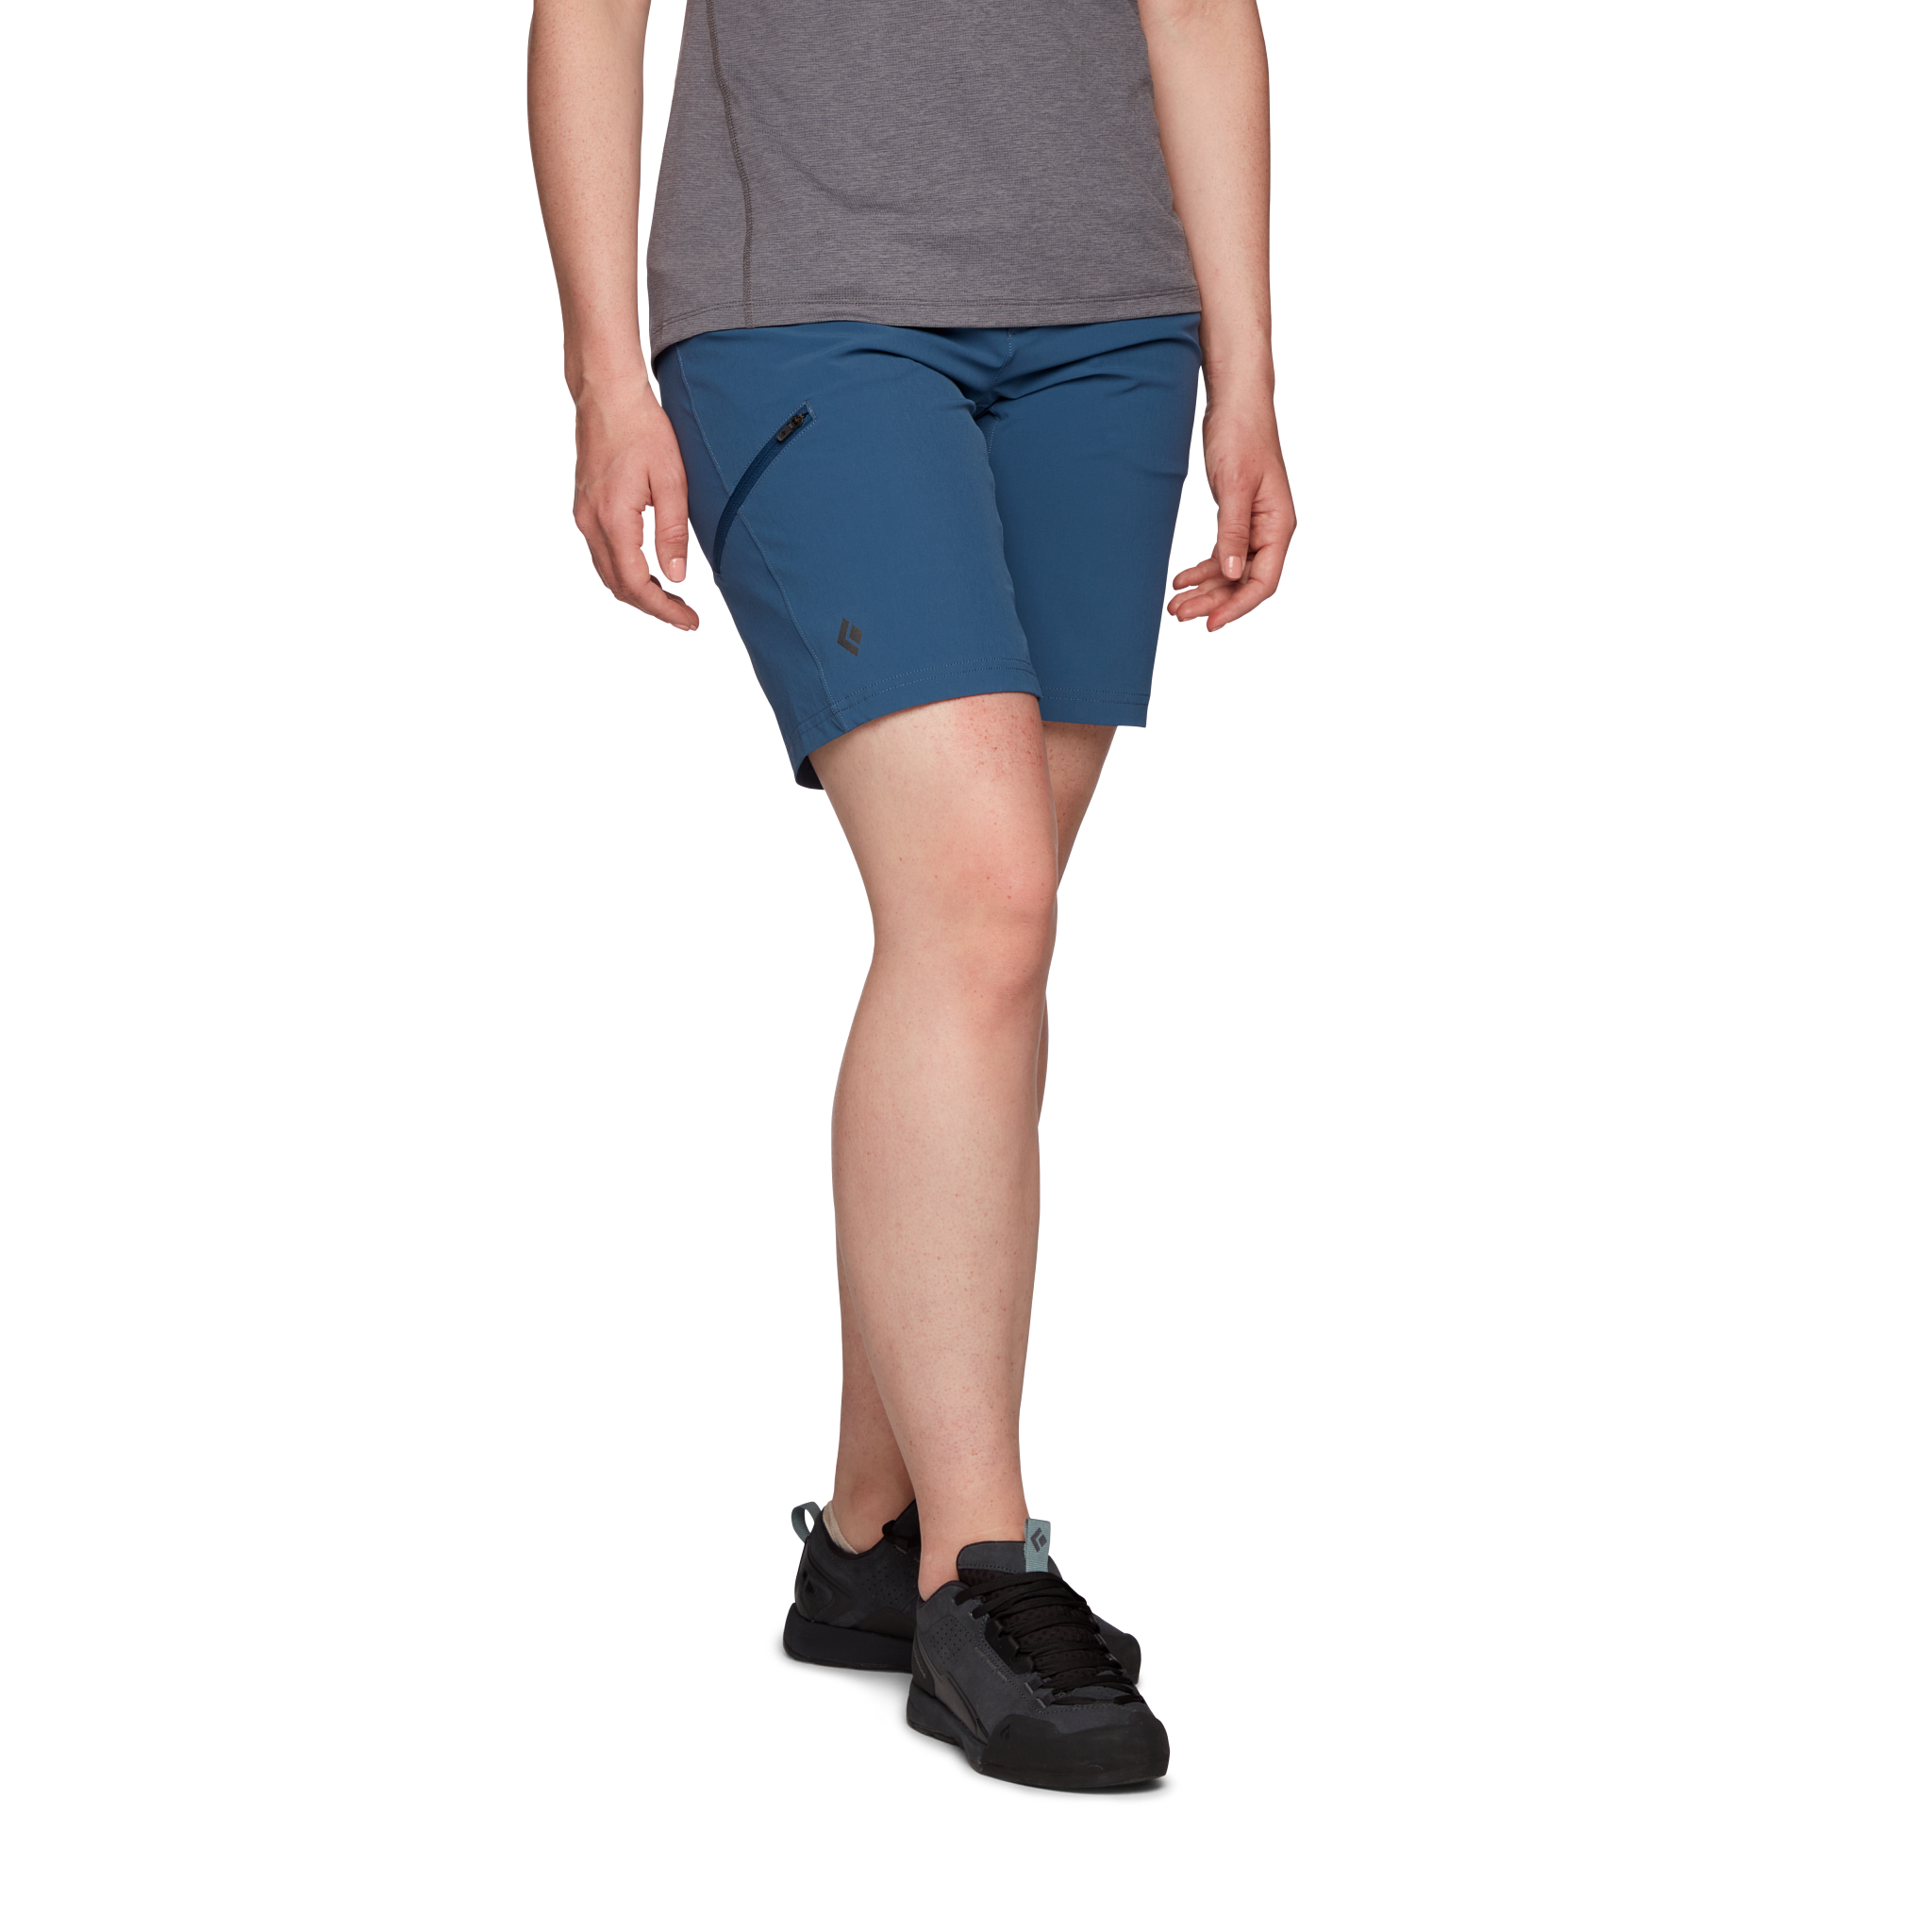 Black Diamond Equipment Women's Valley Shorts Size 8, in Ink Blue